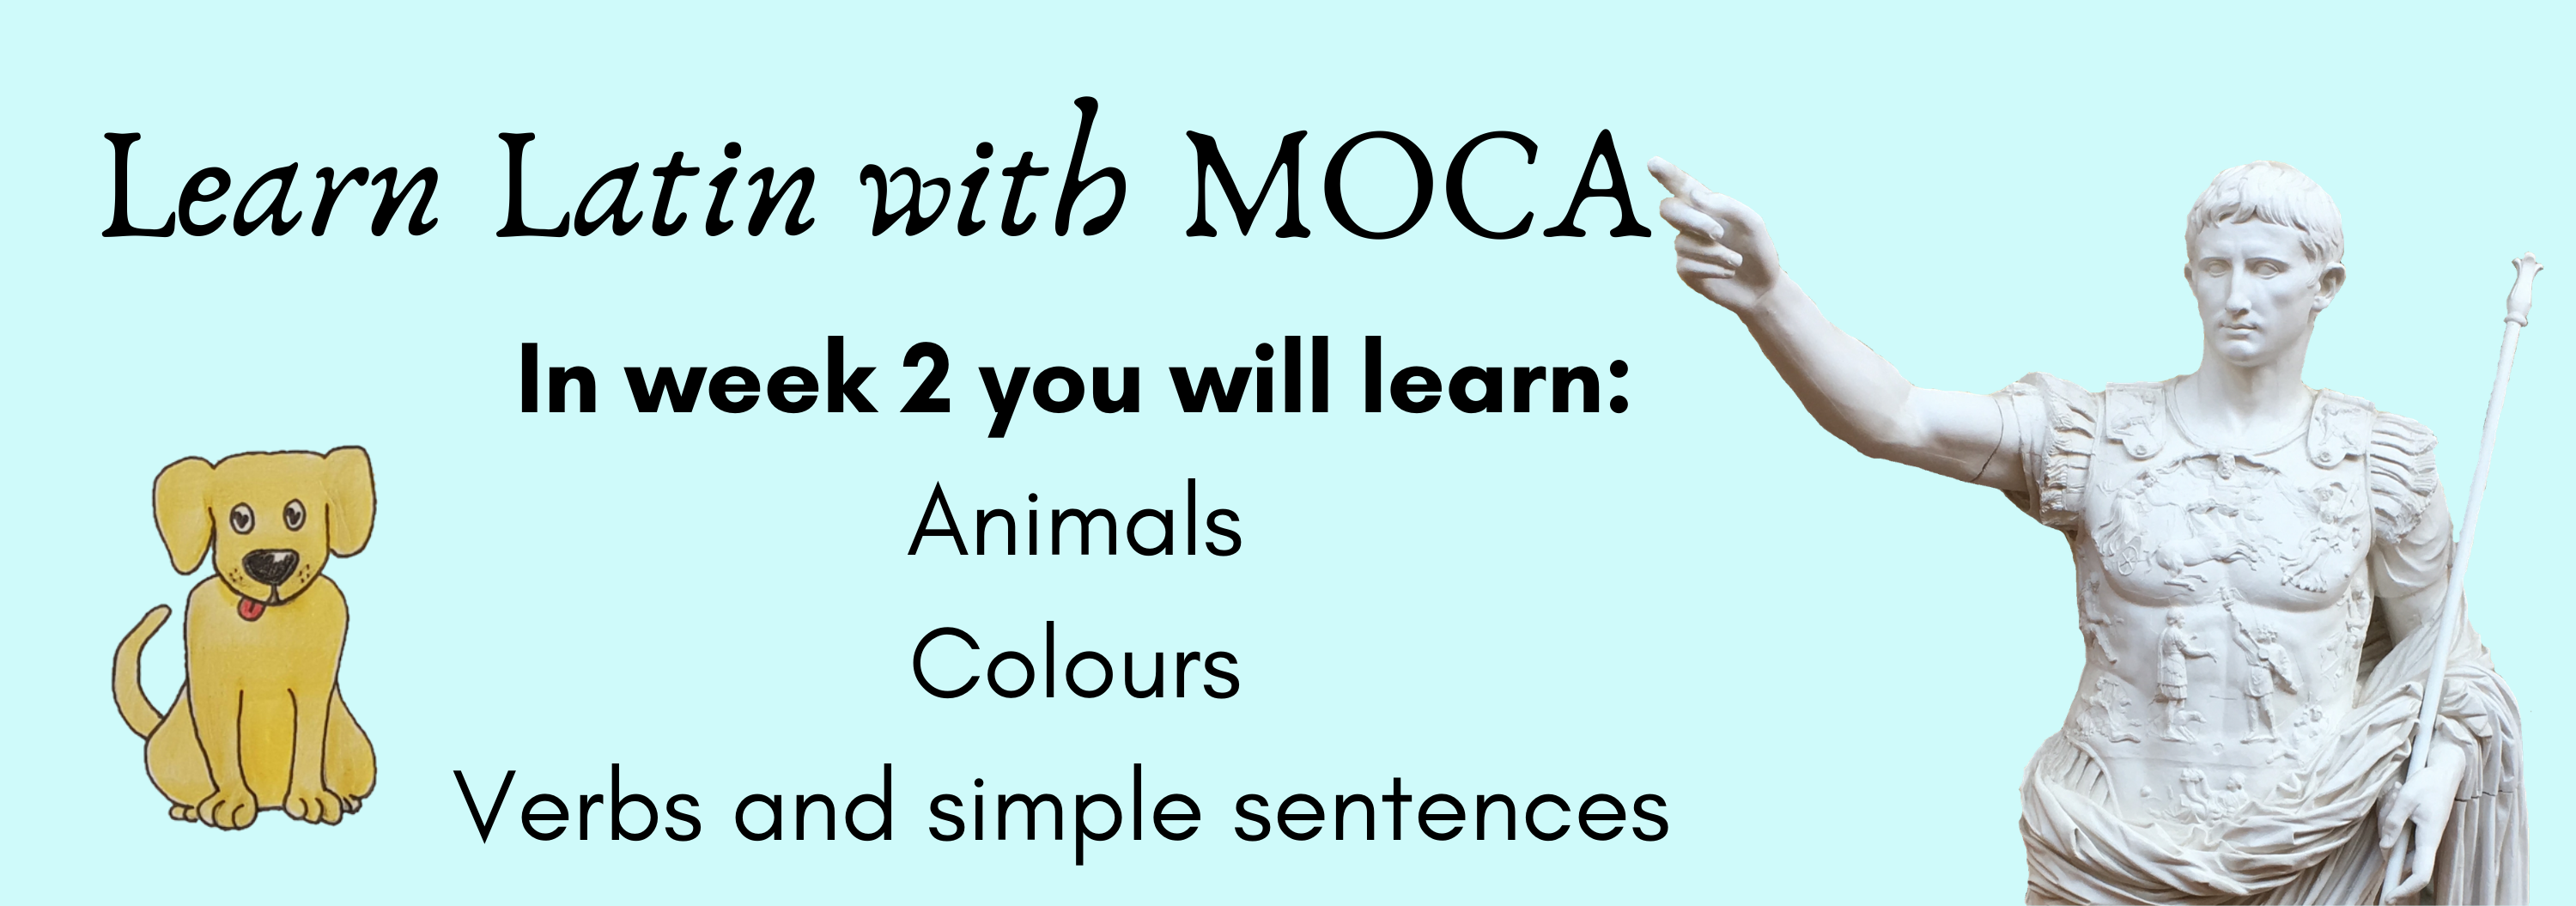  Learn Latin with Moca